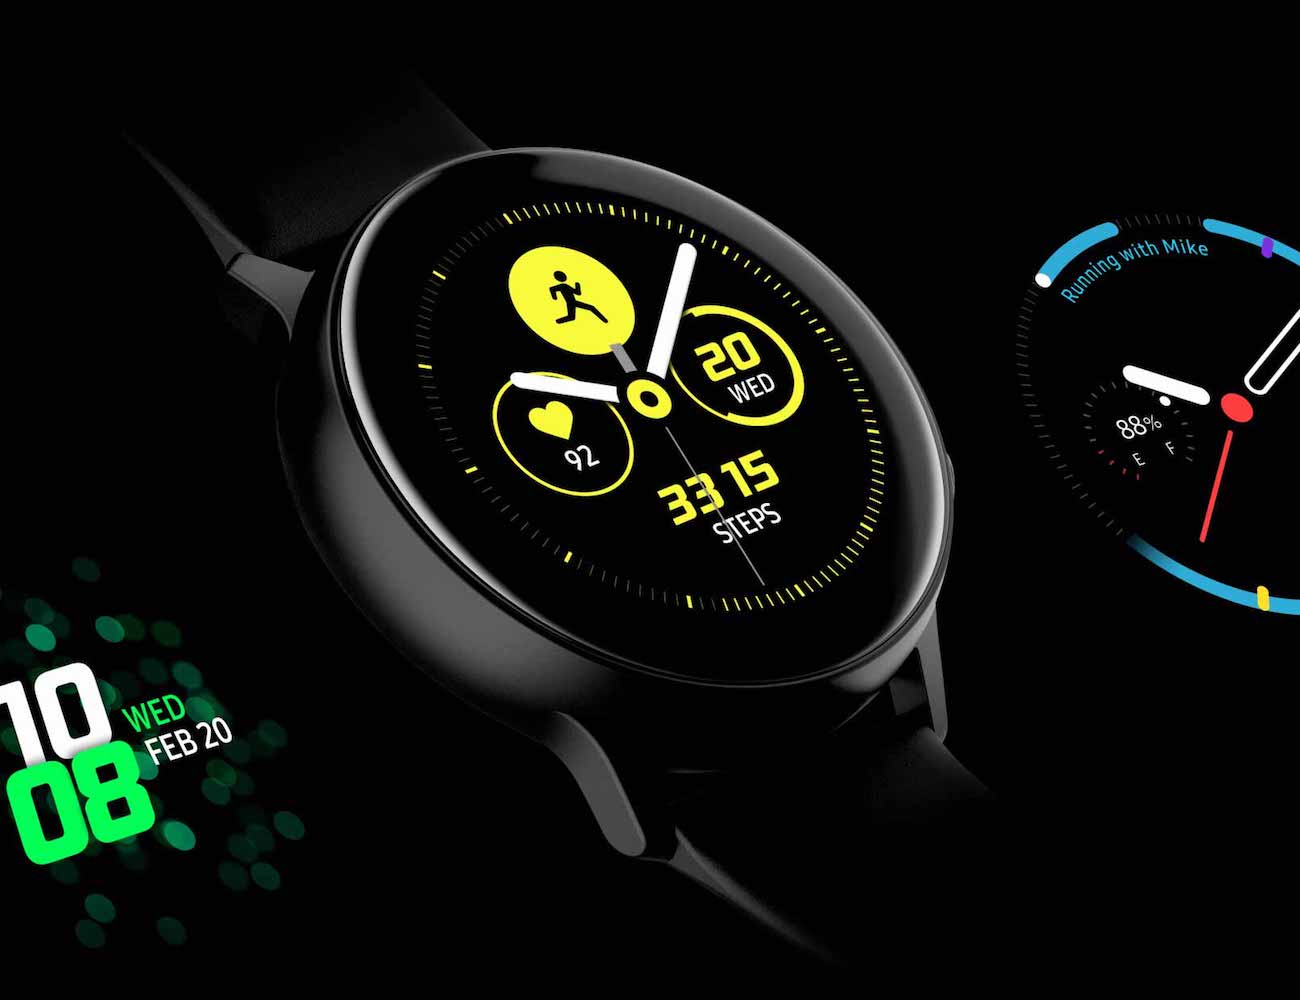 Pametni sat Samsung Galaxy Watch Active - prednosti i nedostaci